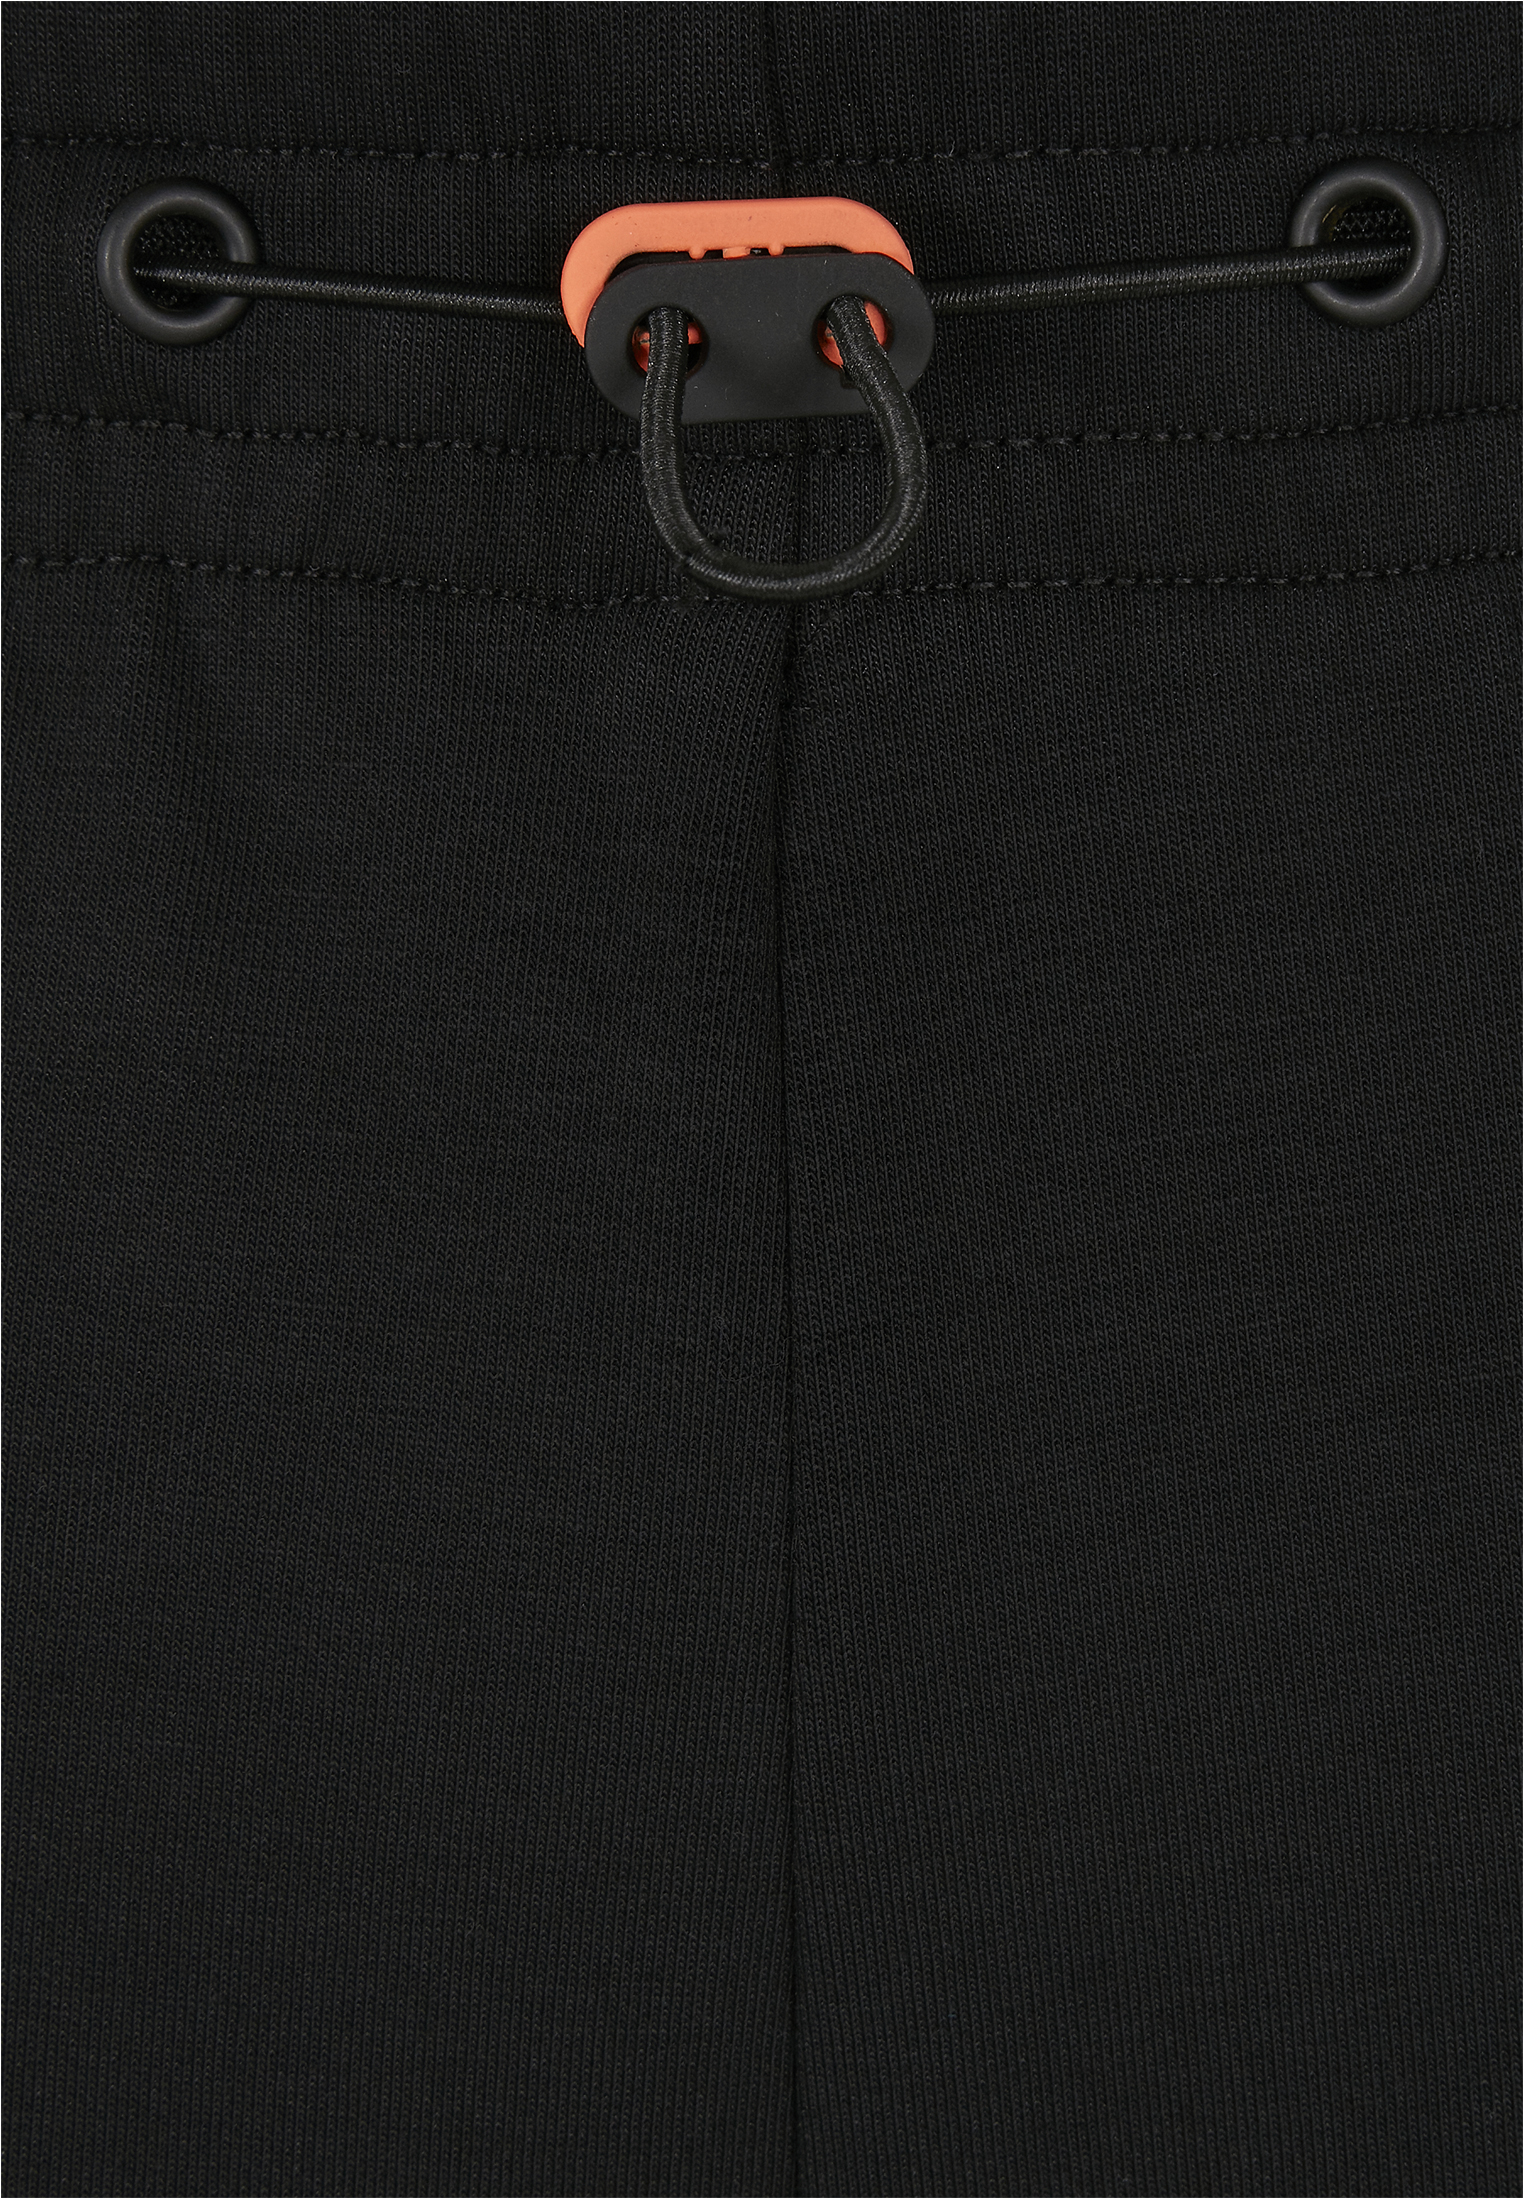 Sweatpants Basic Track Pants in Farbe black